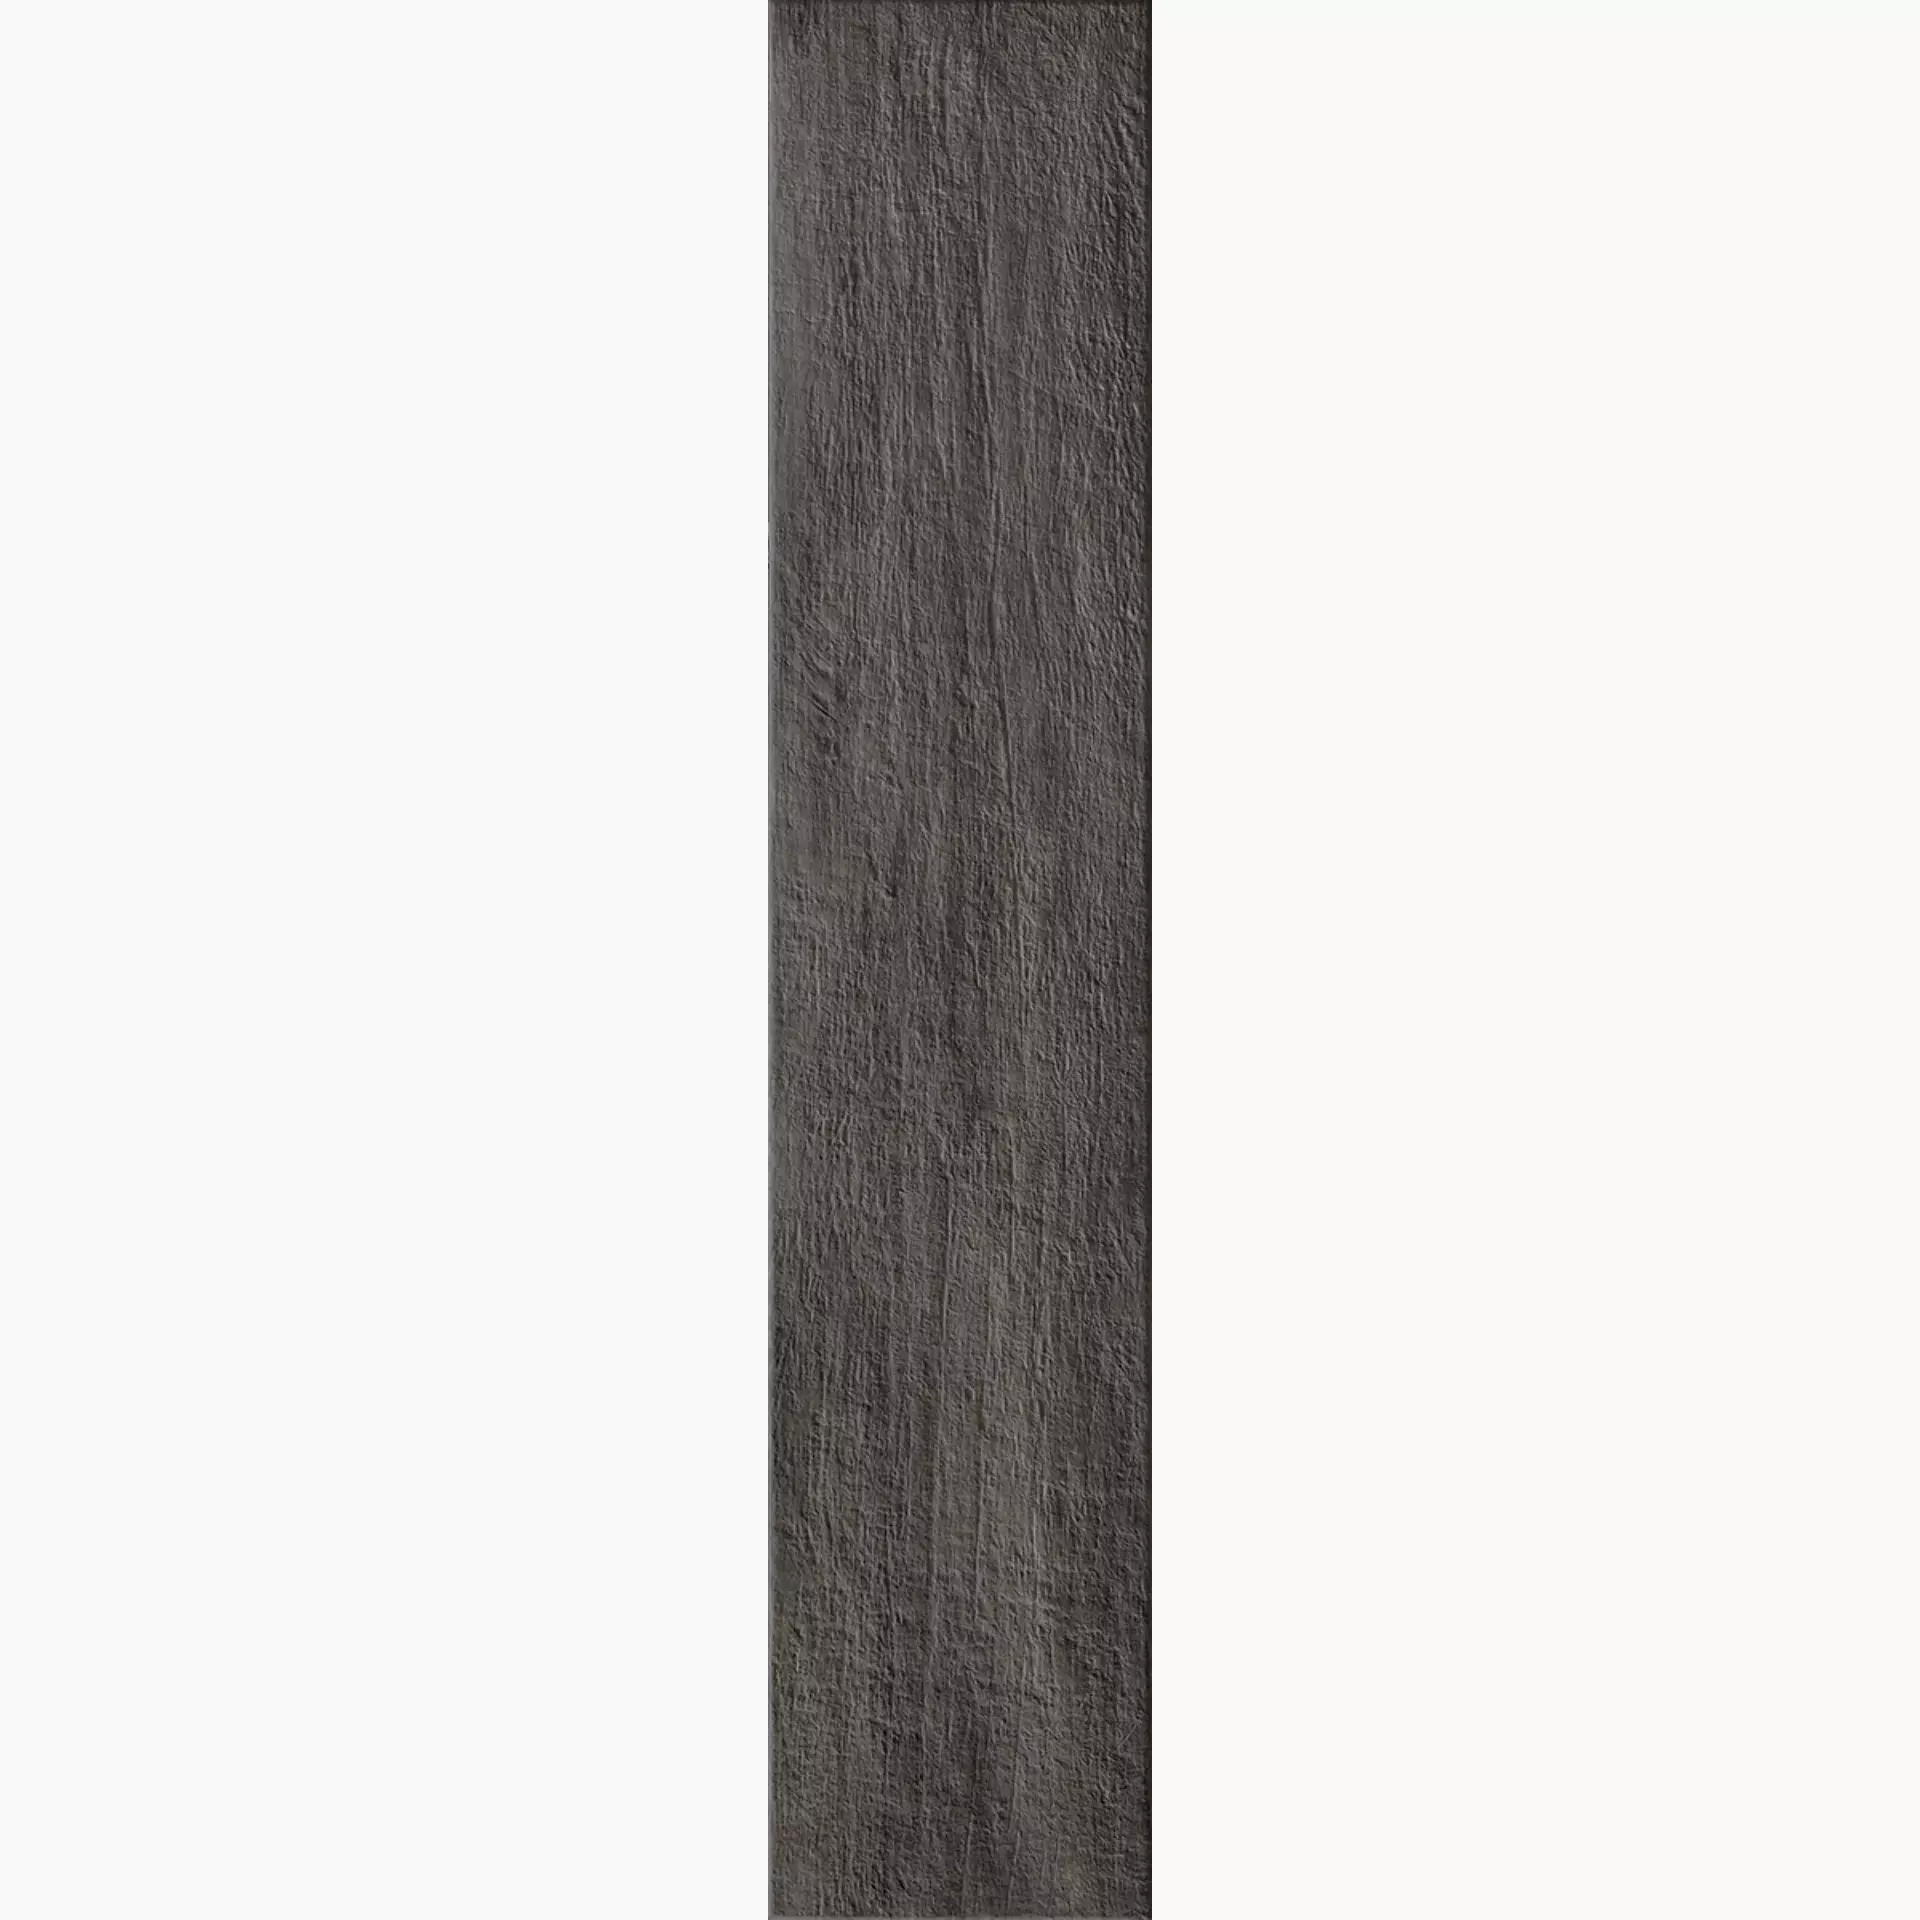 Rondine Greenwood Nero Strong J86710 24x120cm 9,5mm